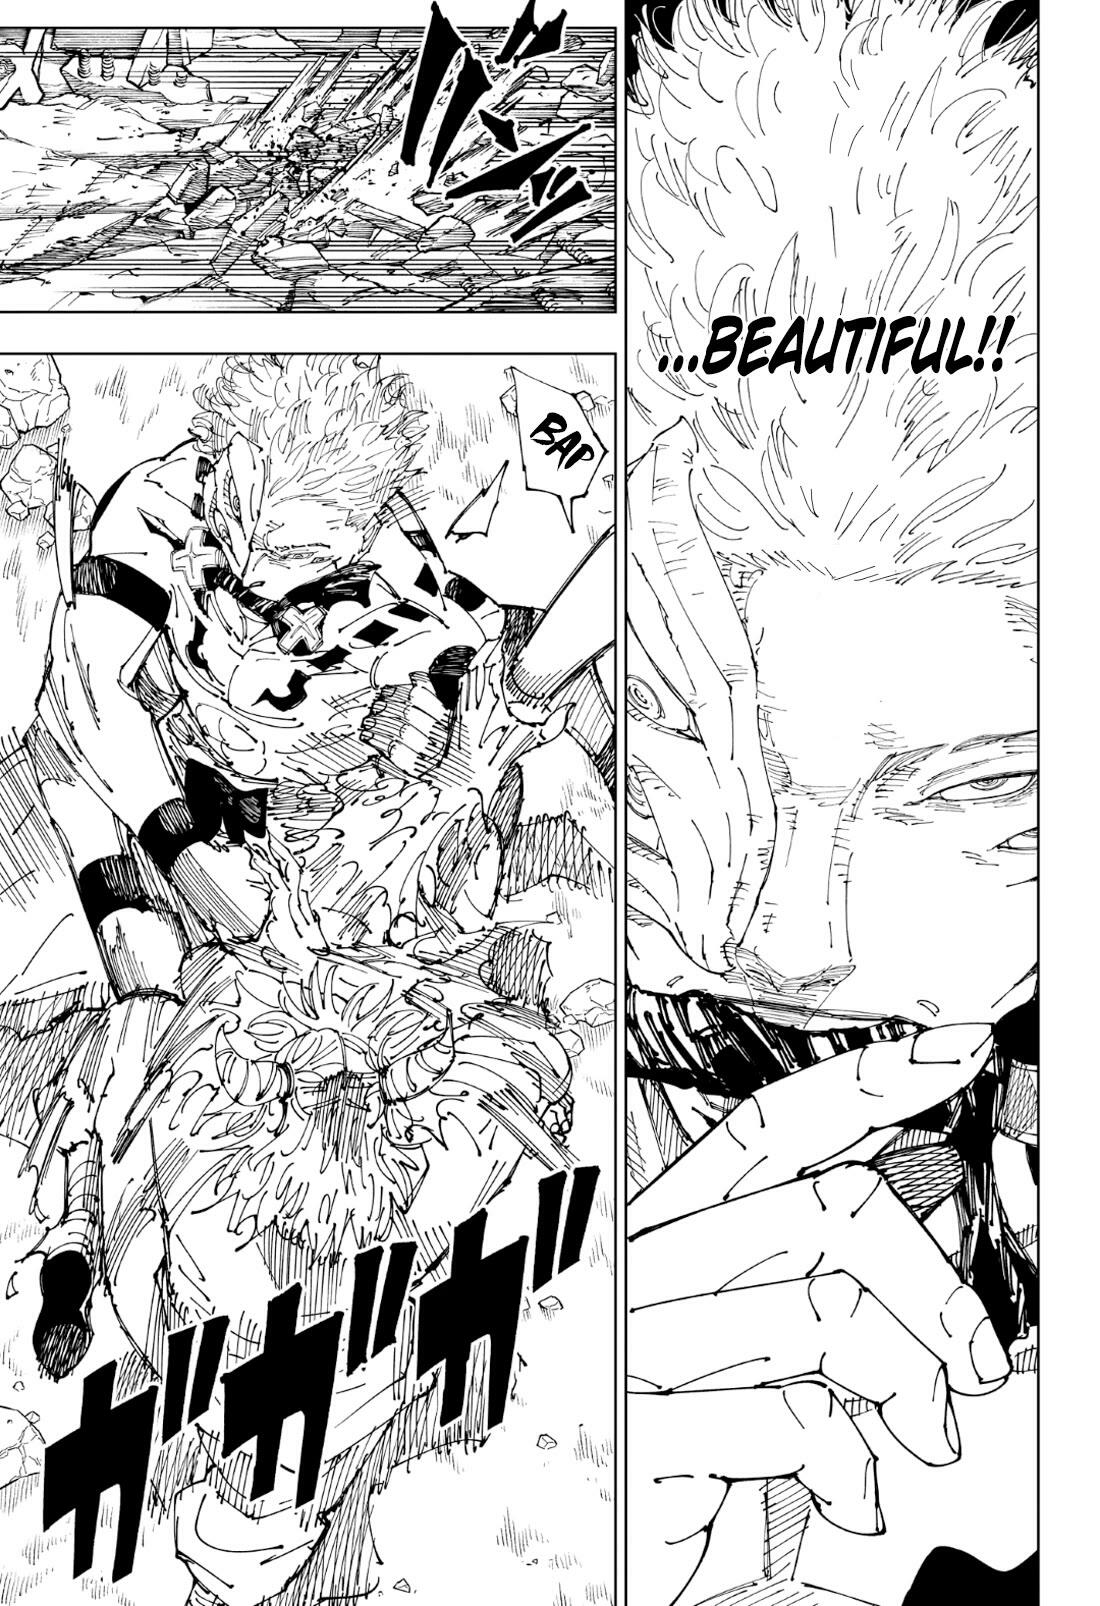 Jujutsu Kaisen Chapter 238: Chapter 238: The Decisive Battle In The Uninhabited, Demon-Infested Shinjuku ⑮ page 5 - Mangakakalot